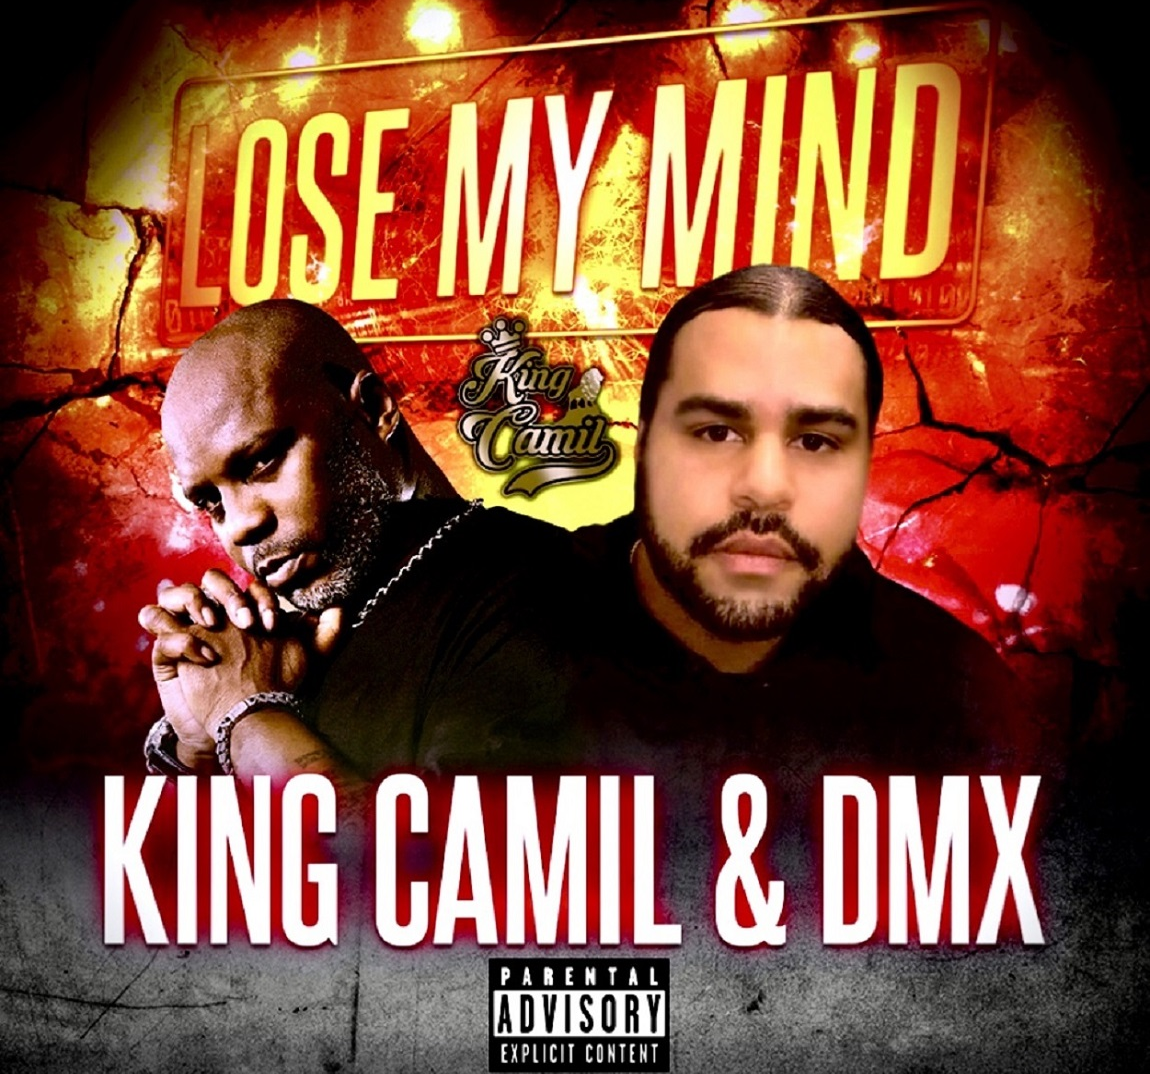 King Camil & DMX – Lose My Mind